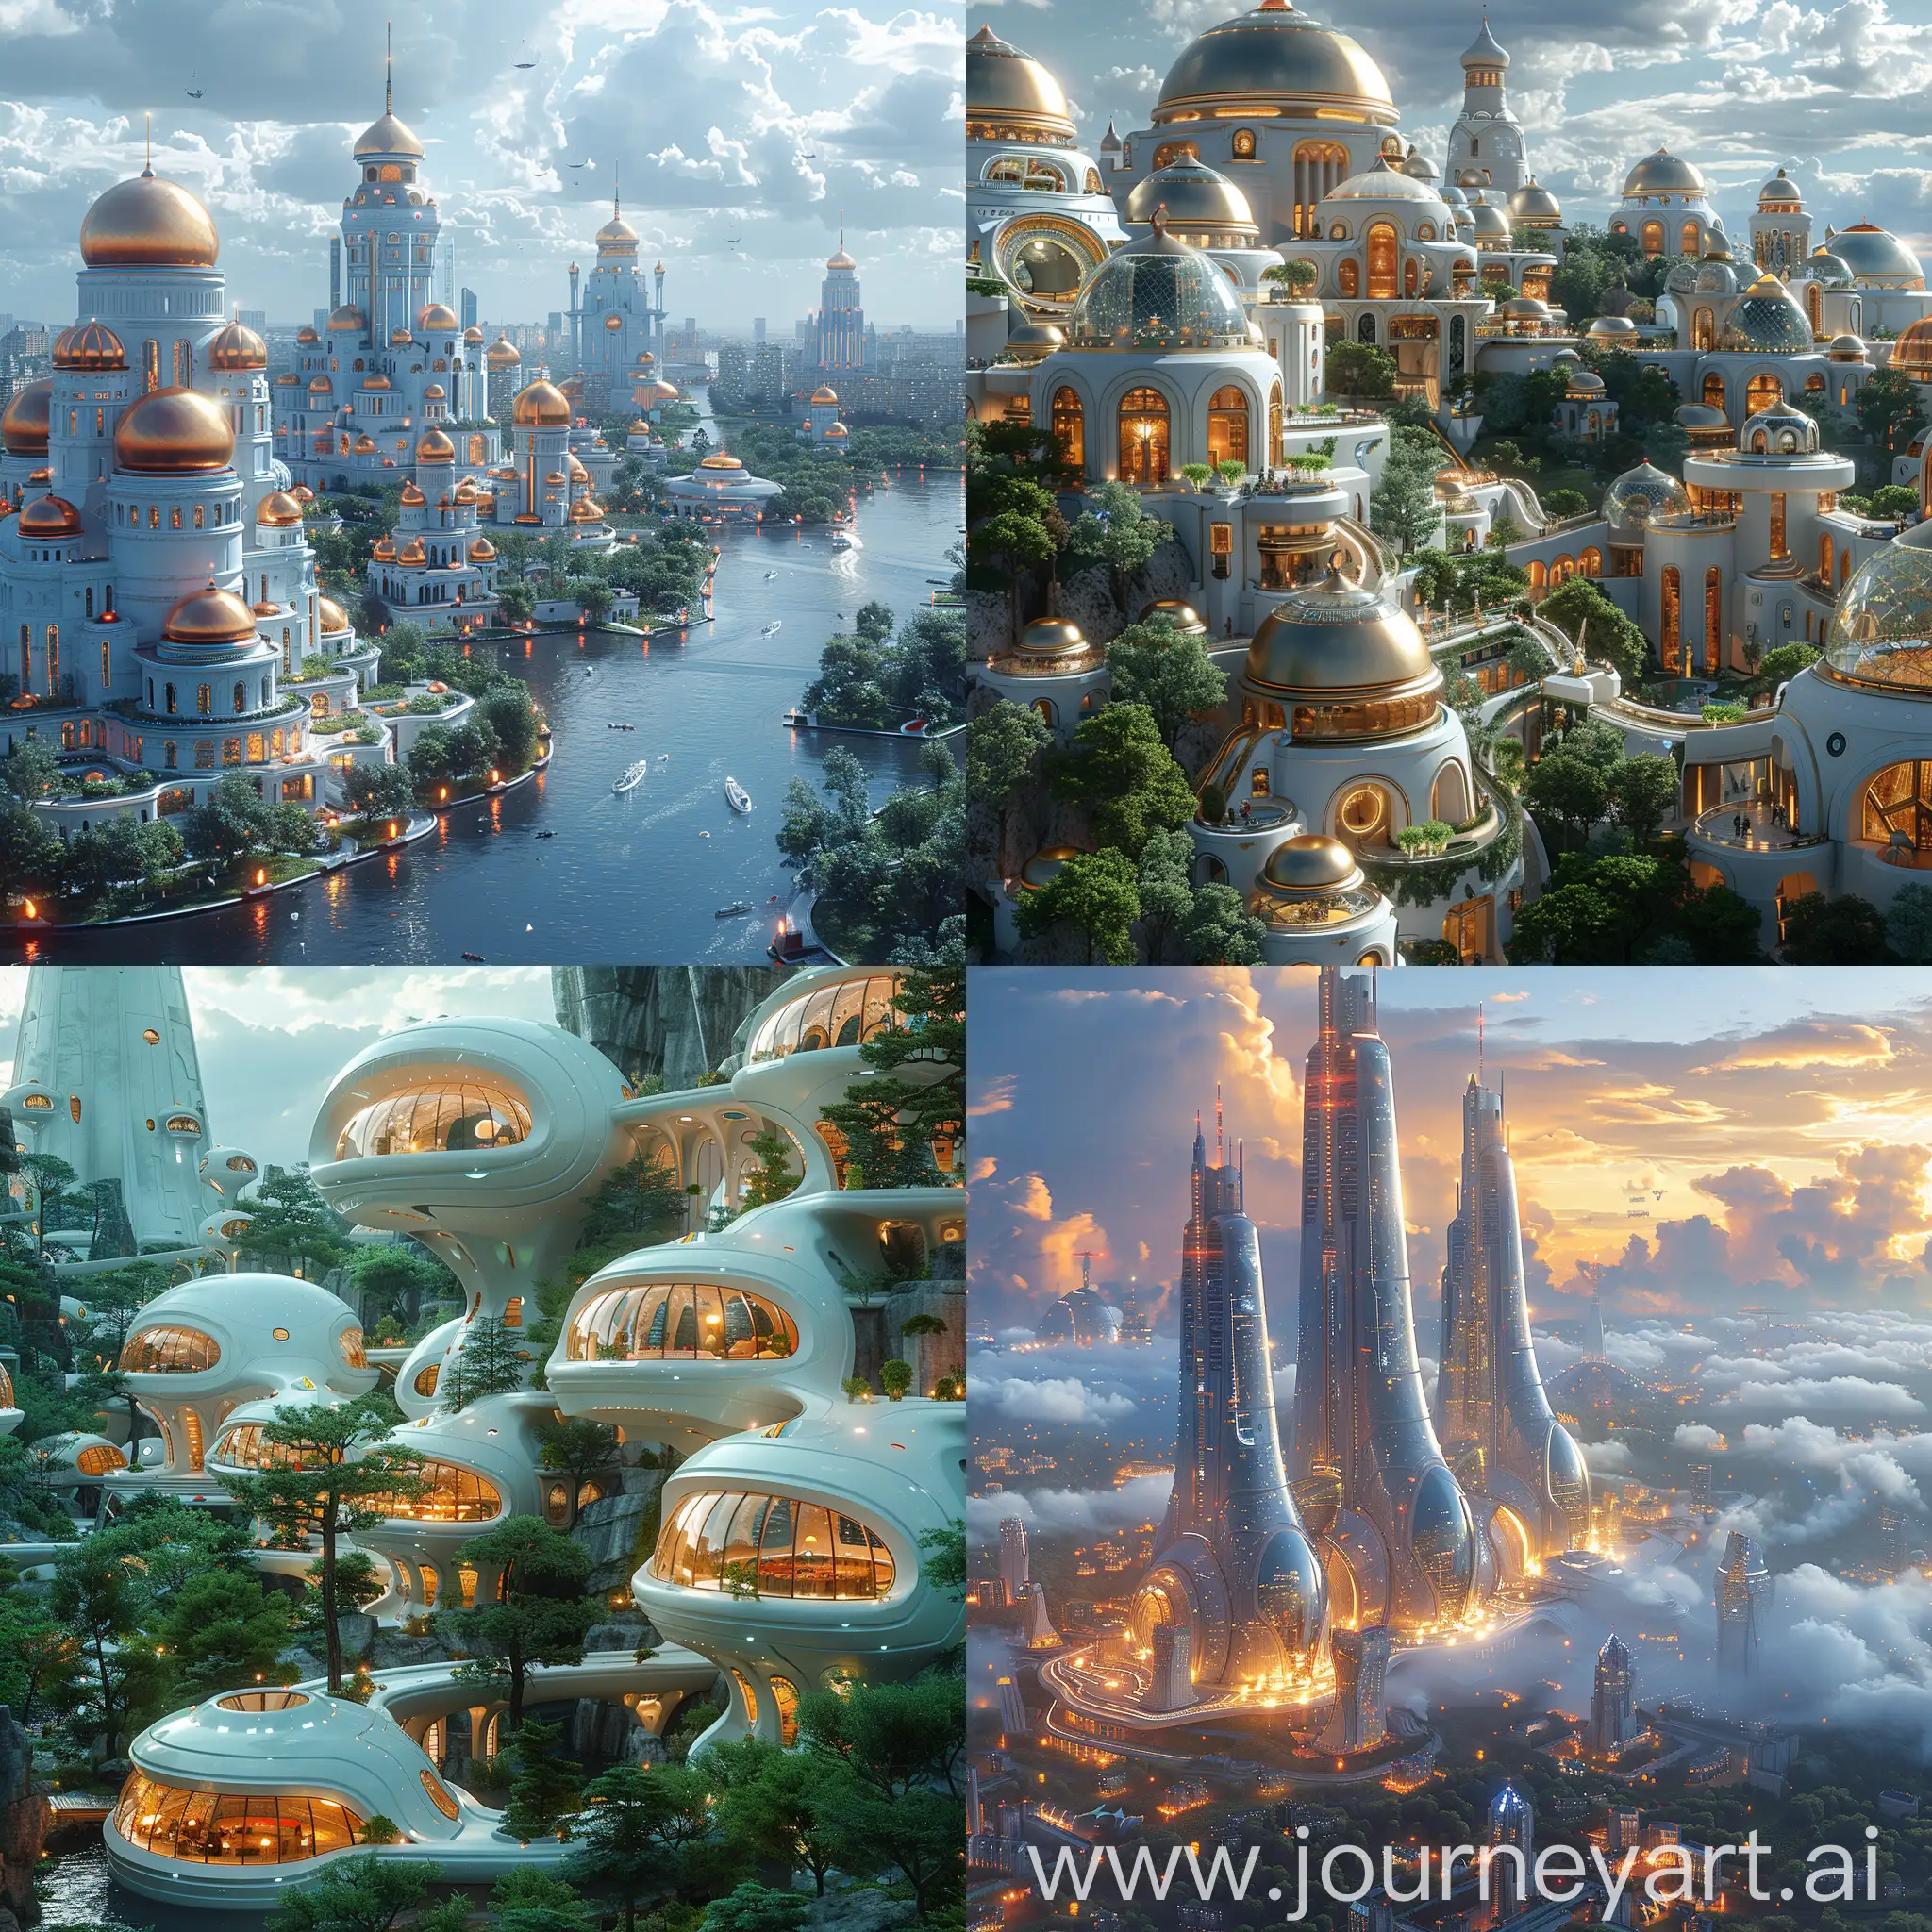 UltraModern-Futuristic-Moscow-Vision-of-an-Advanced-Utopian-Civilization